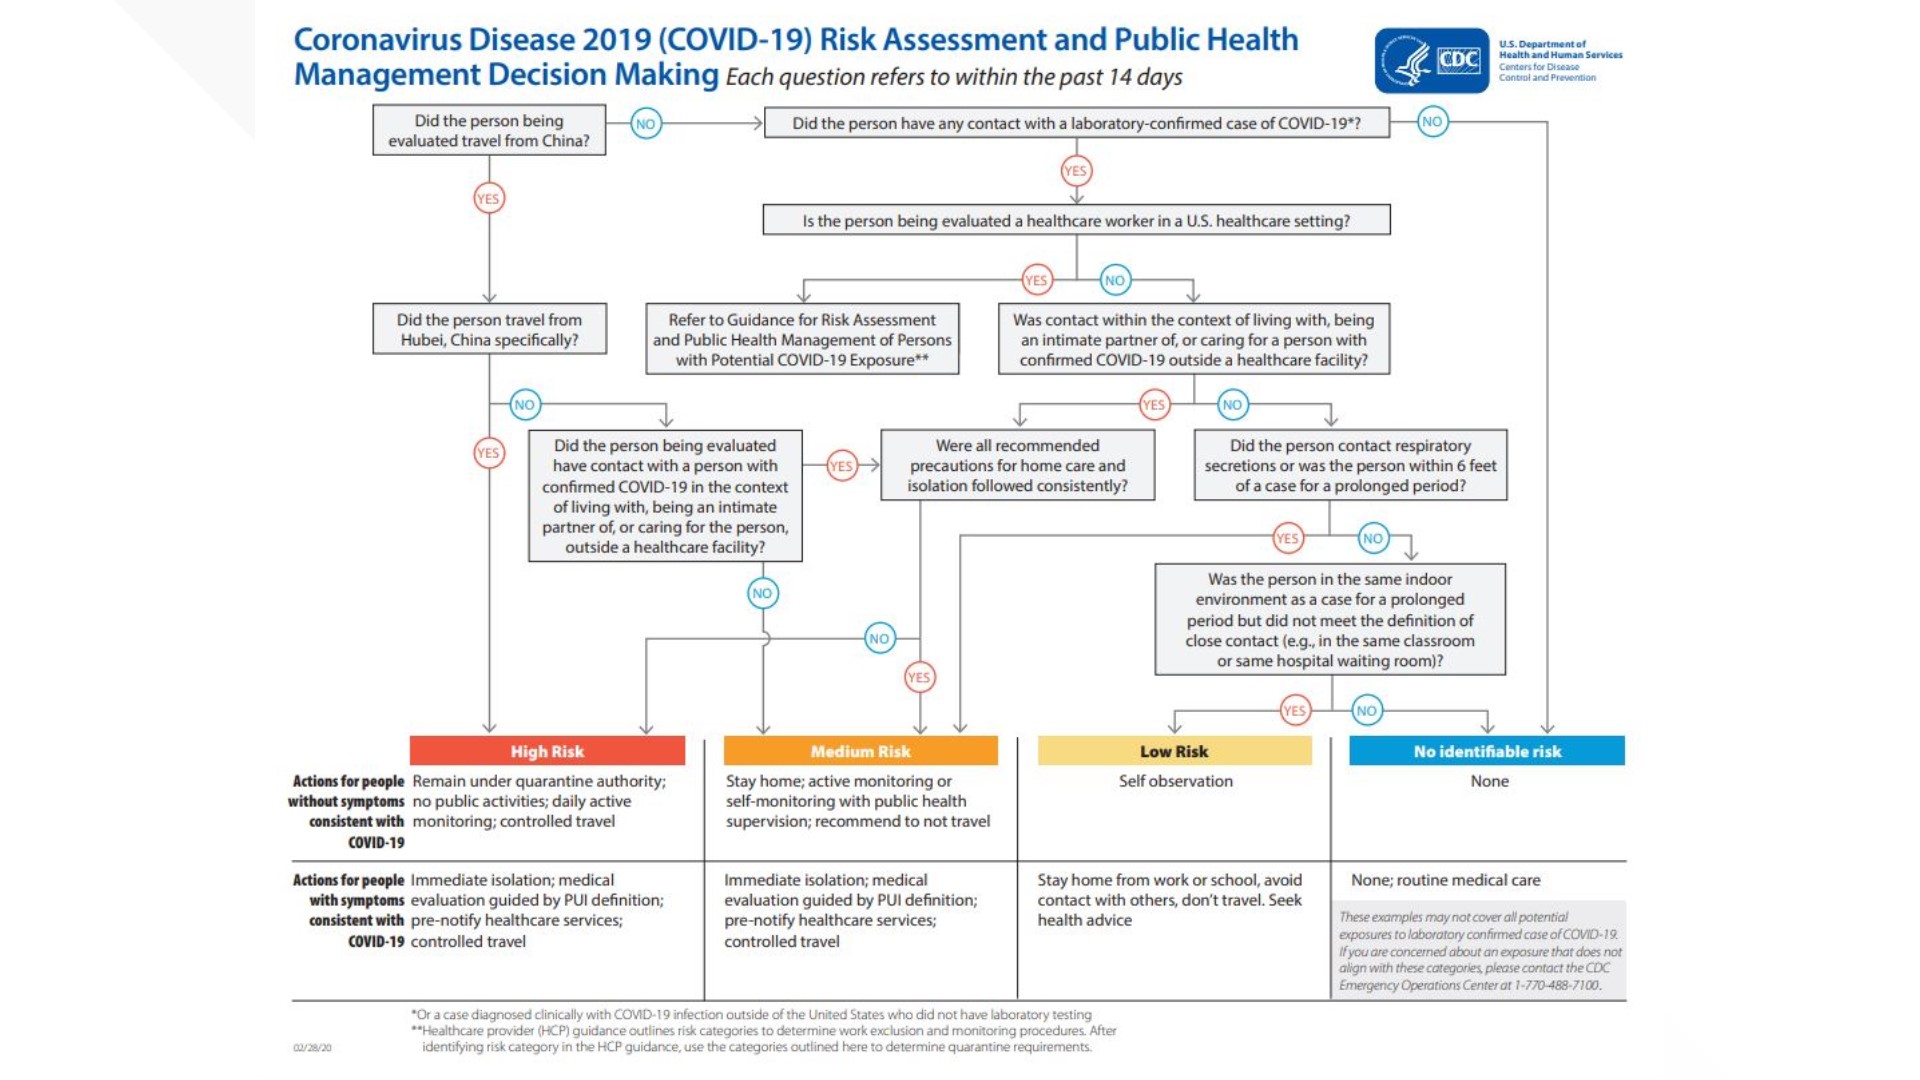 CDC flow chart explains COVID19 quarantine and selfisolation